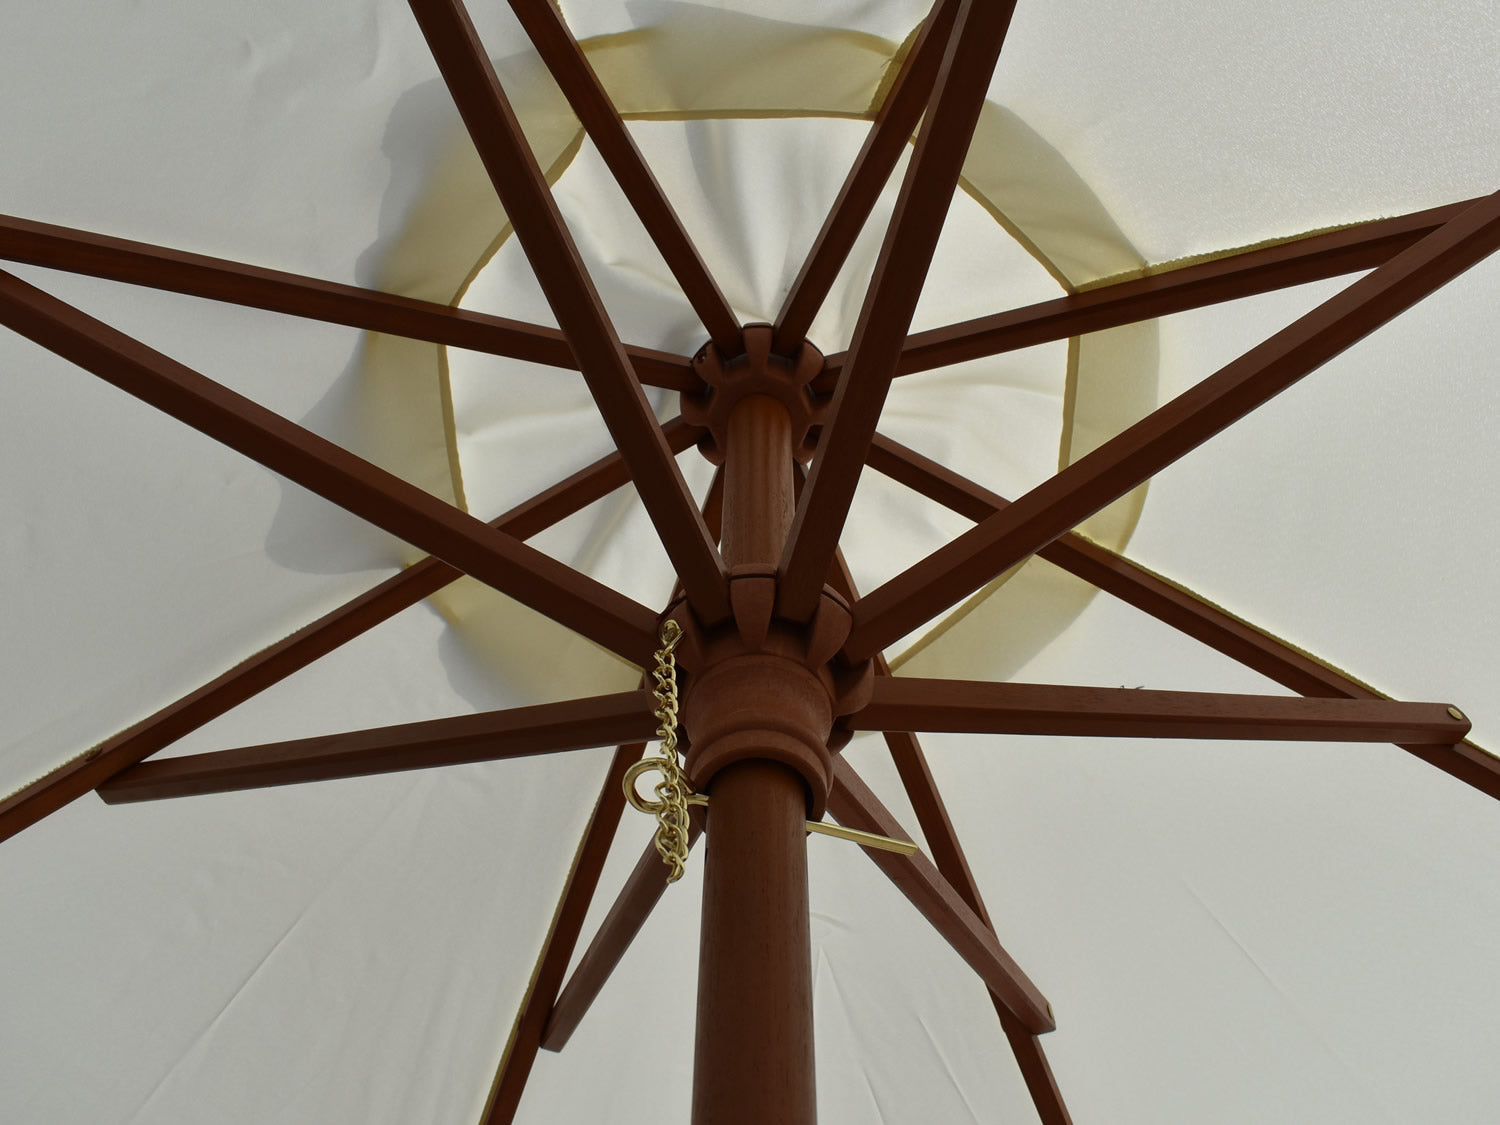 2m Octagonal parasol underside wooden  struts